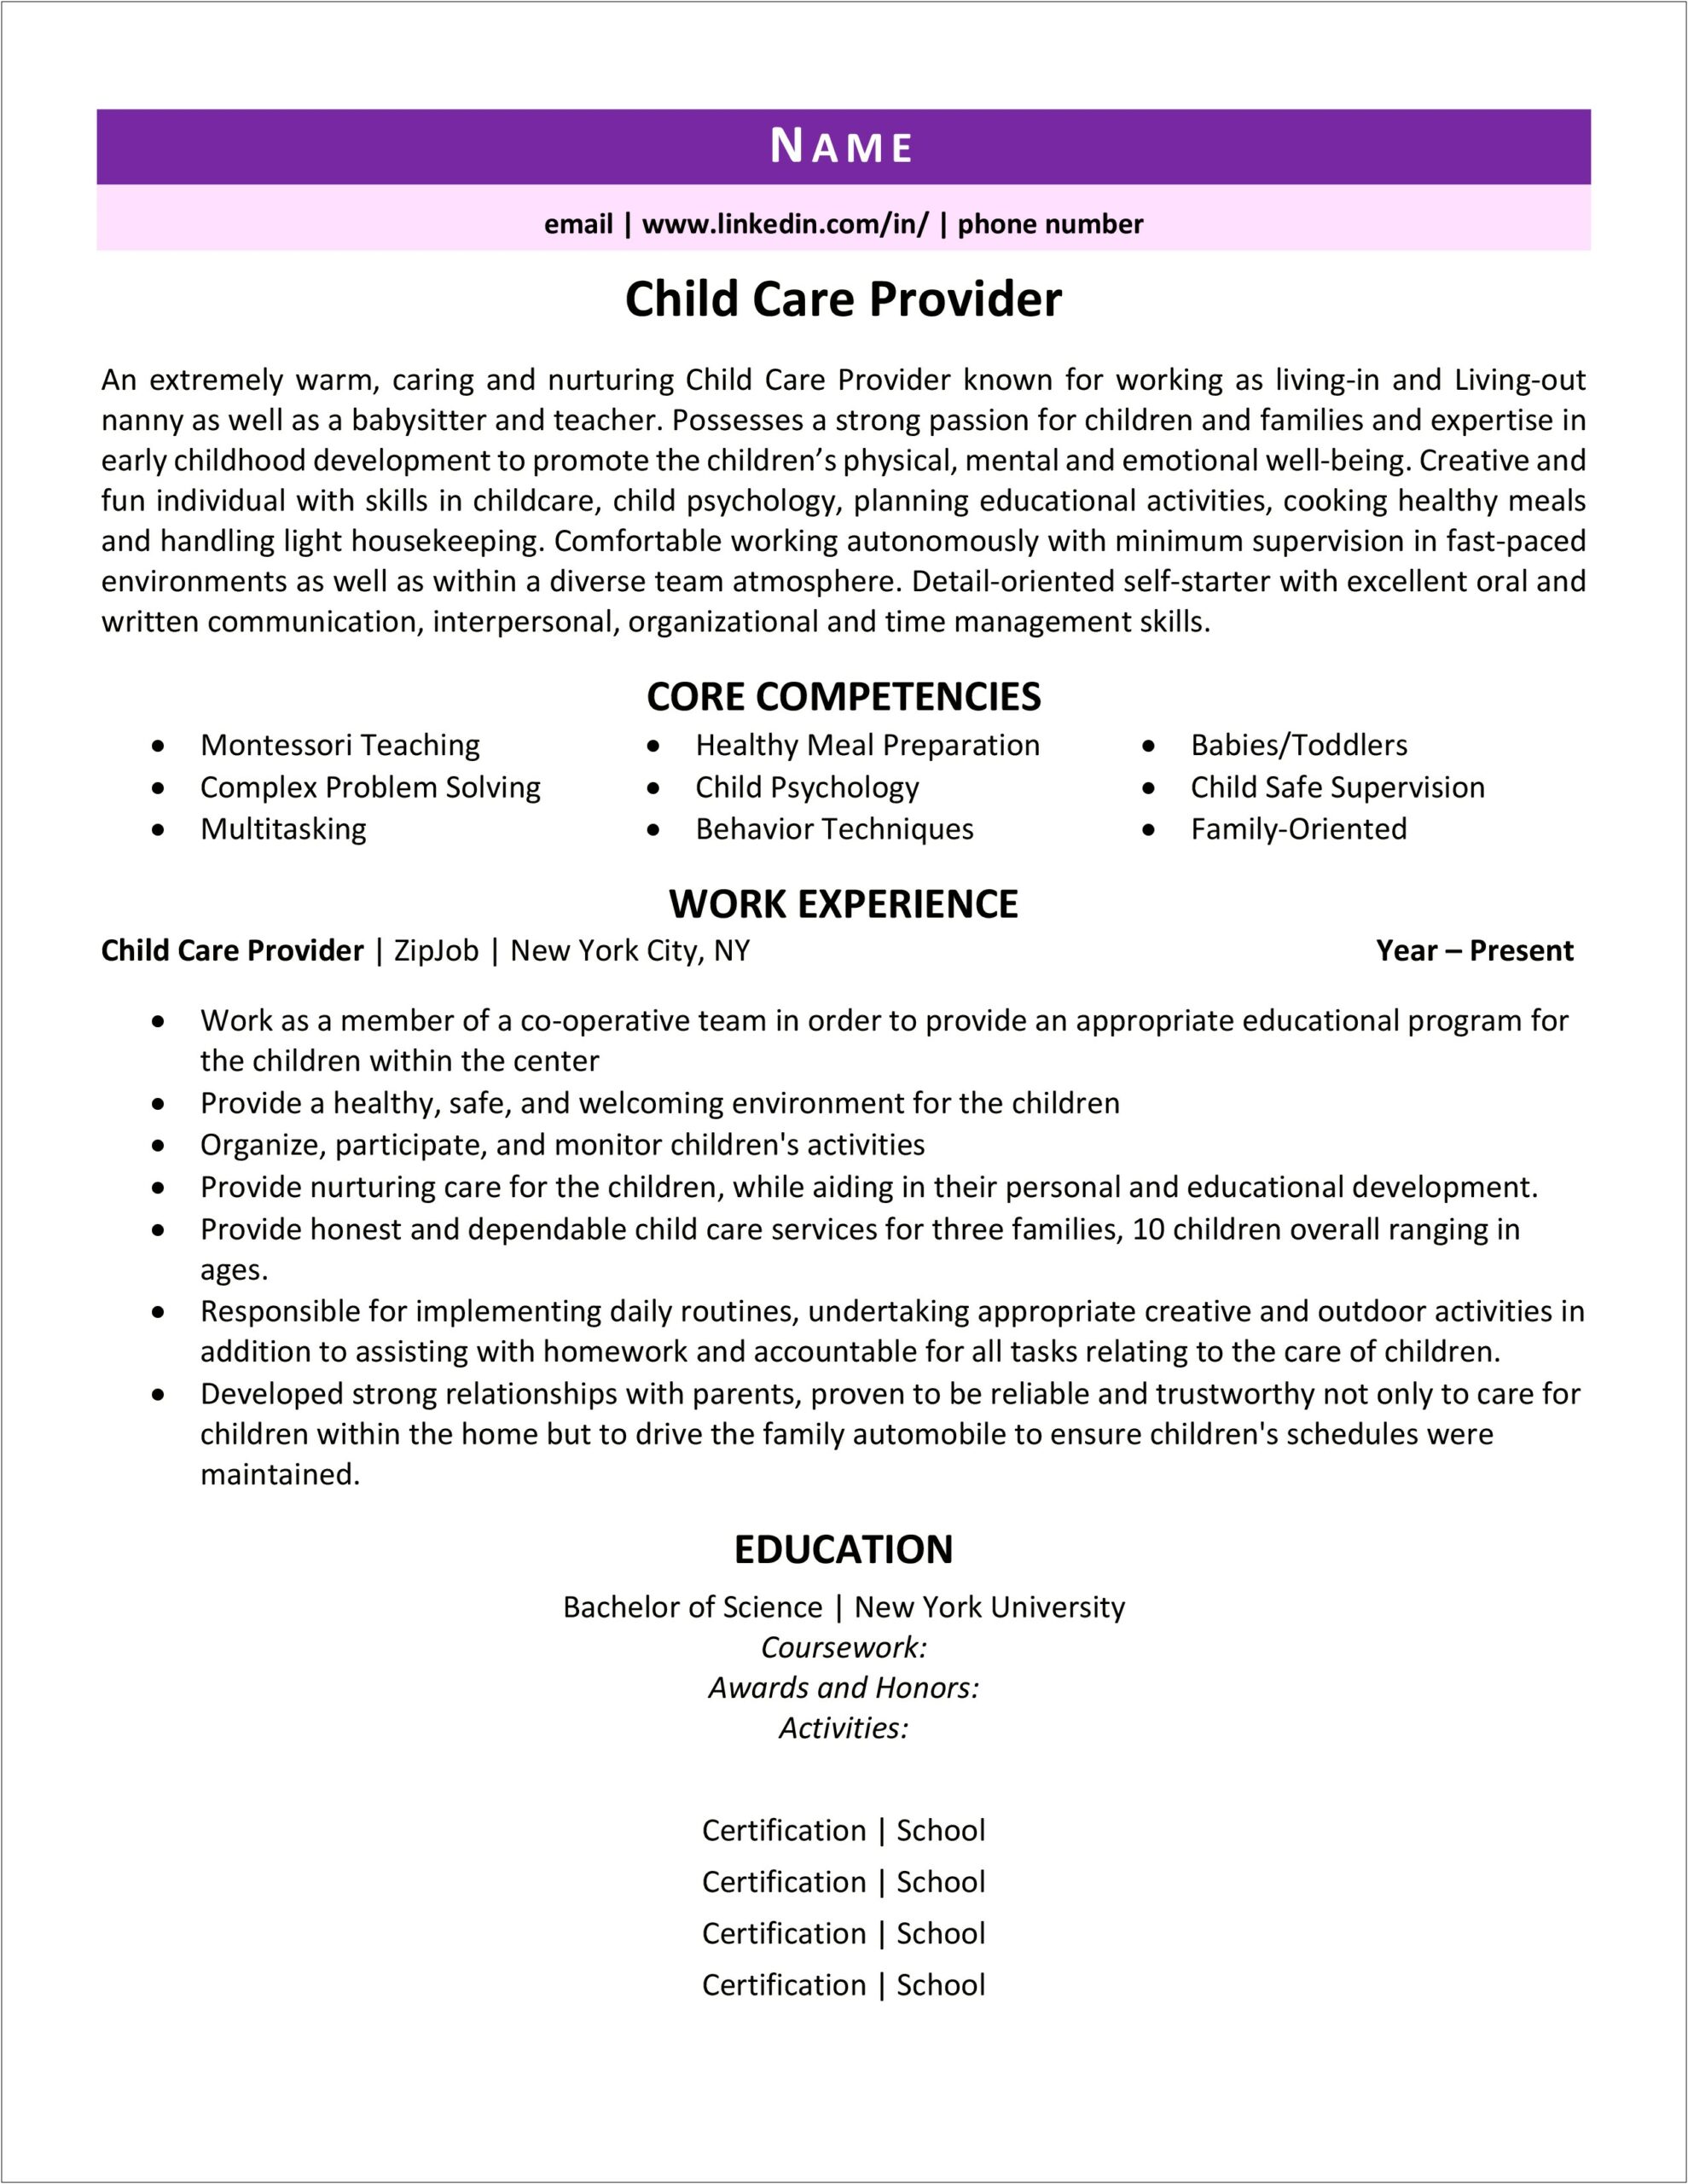 Sample Resume Of Child Care Provider